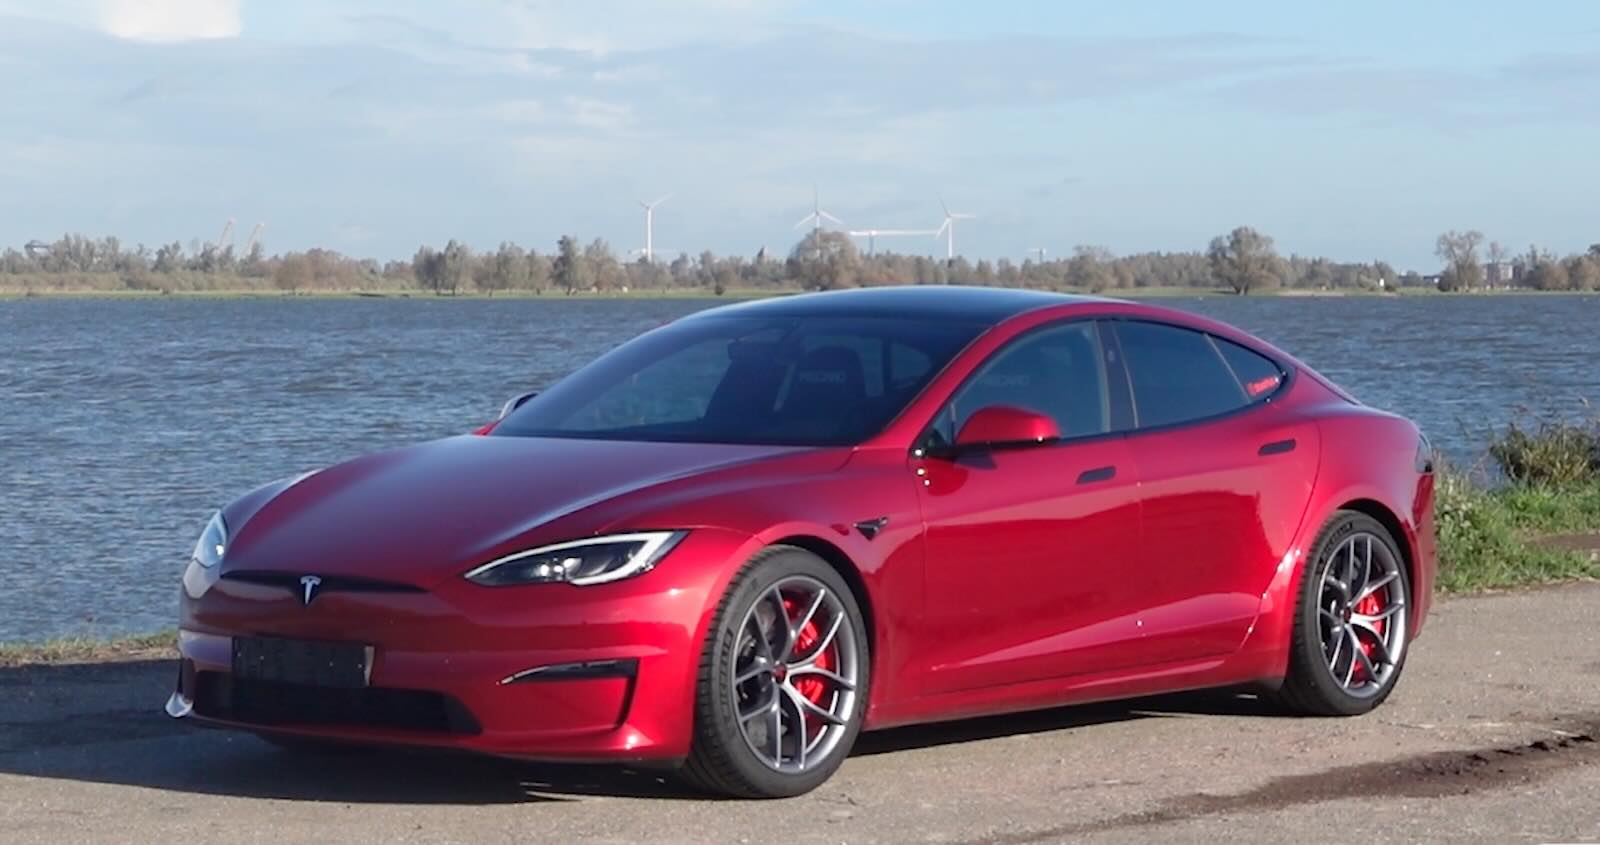 My Car video: Tesla Model S Plaid by Pepijn - Pledge Times